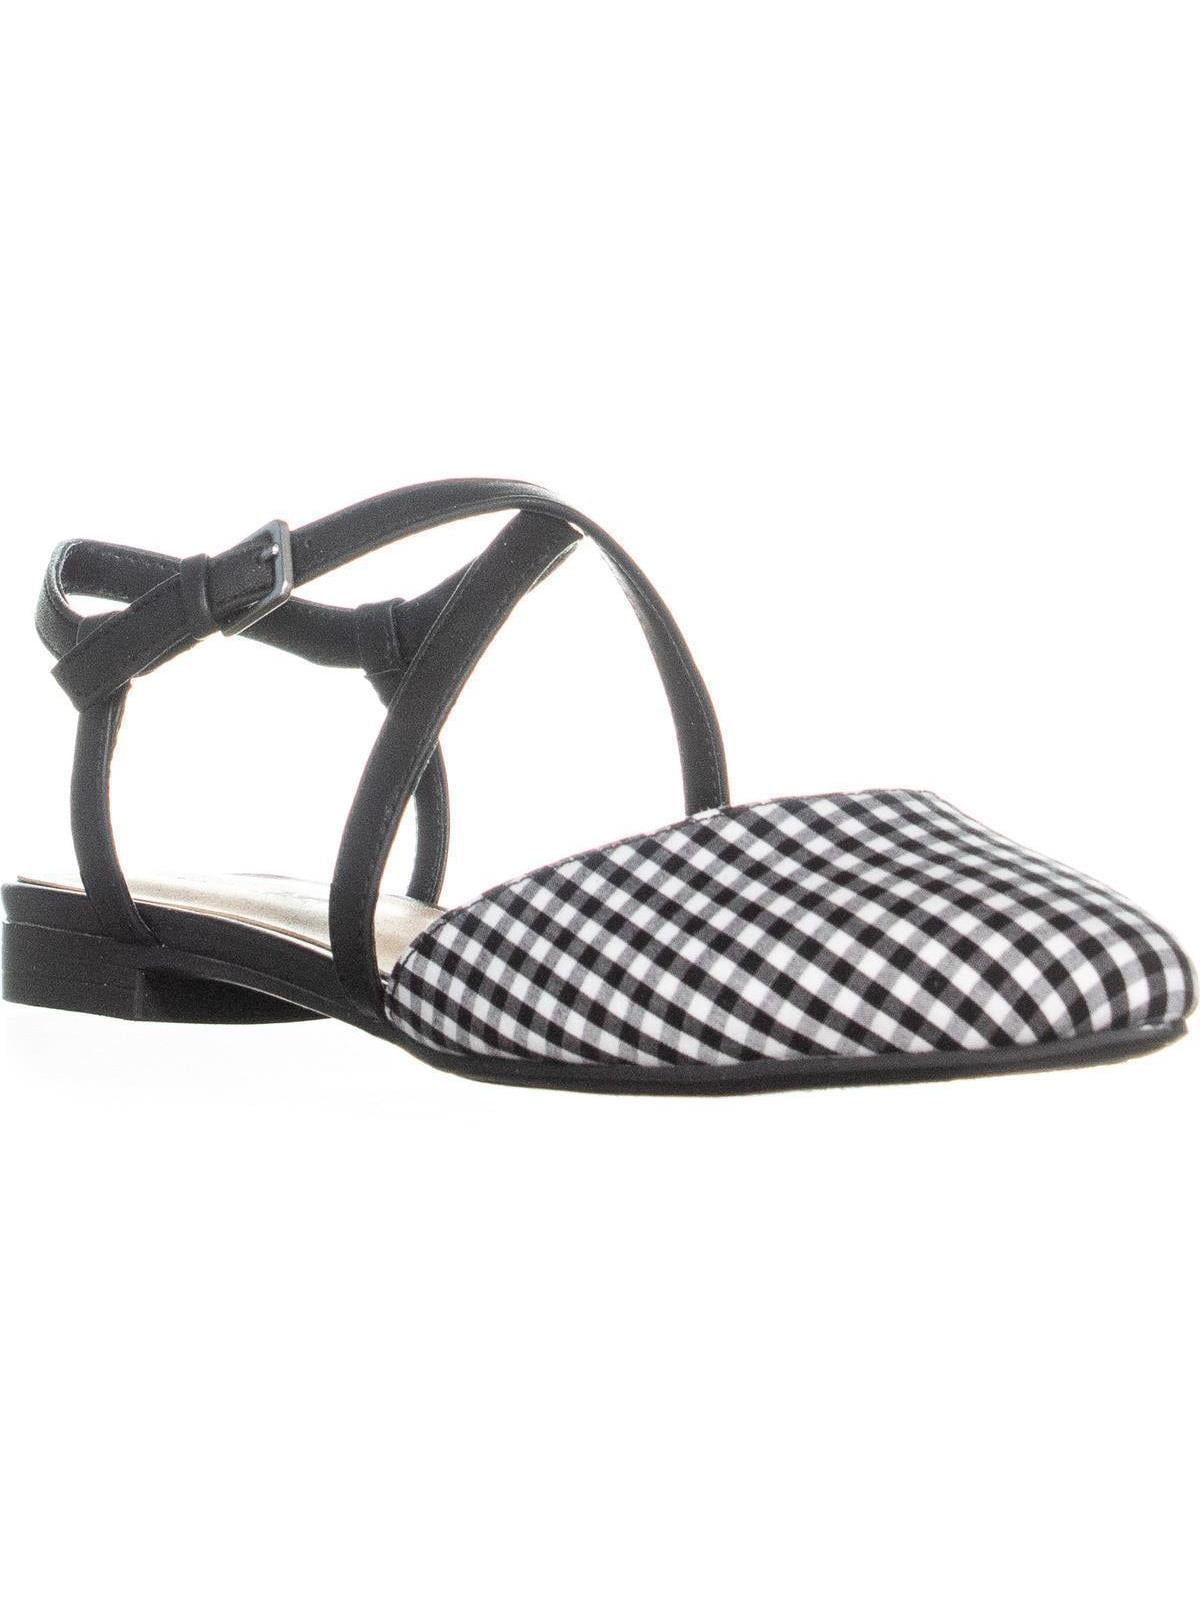 Indigo Rd. - Womens Indigo Rd. Genetic Pointed Toe Sandals, Black Multi ...